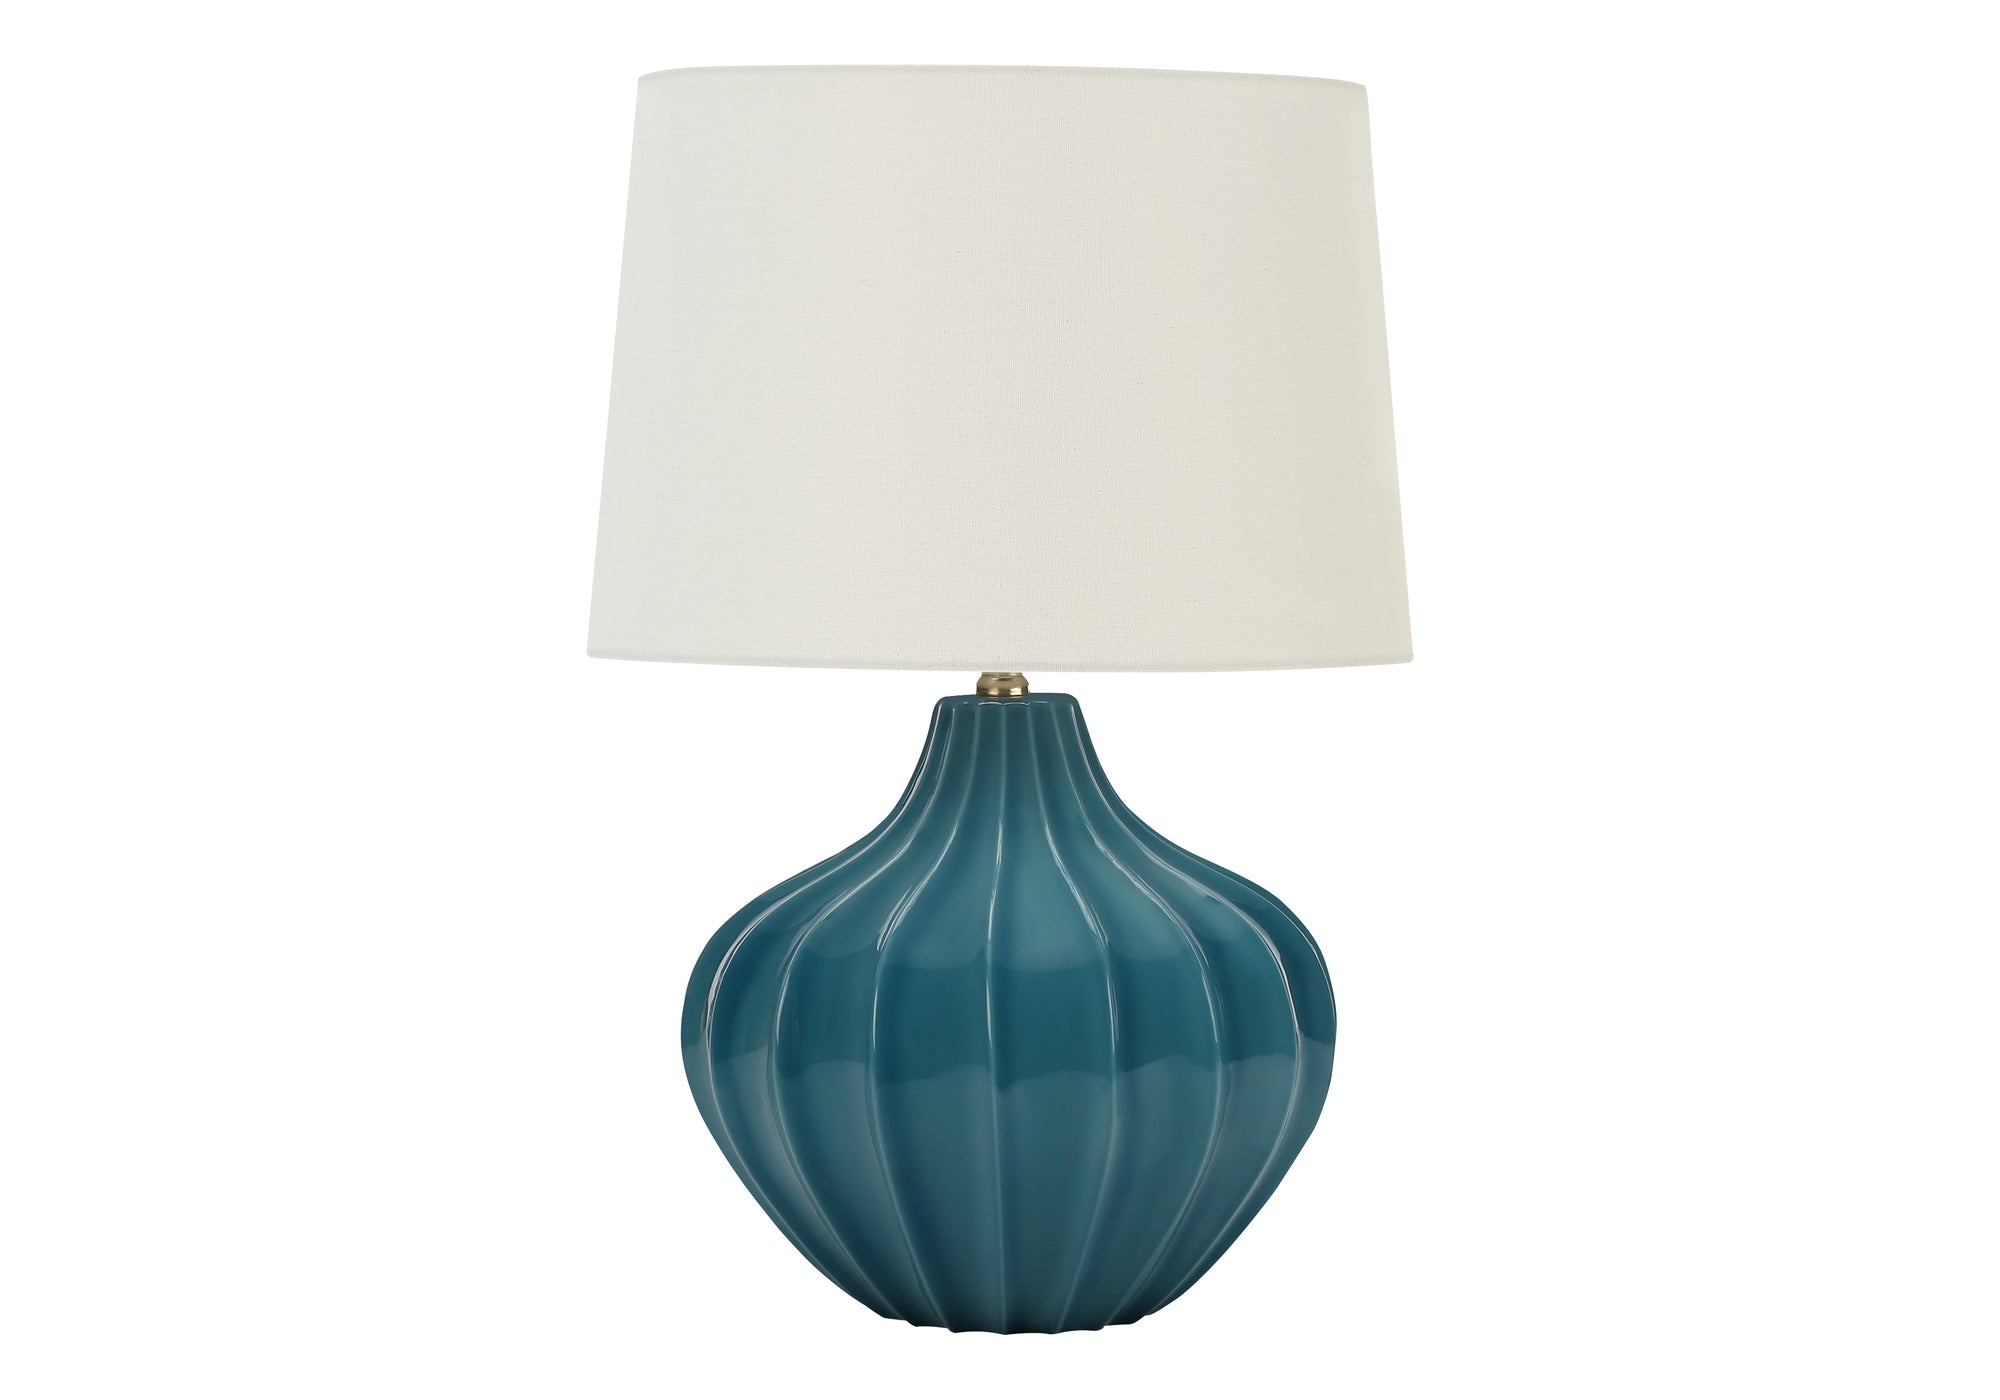 MN-869612    Lighting, 24"H, Table Lamp, Blue Ceramic, Ivory / Cream Shade, Transitional